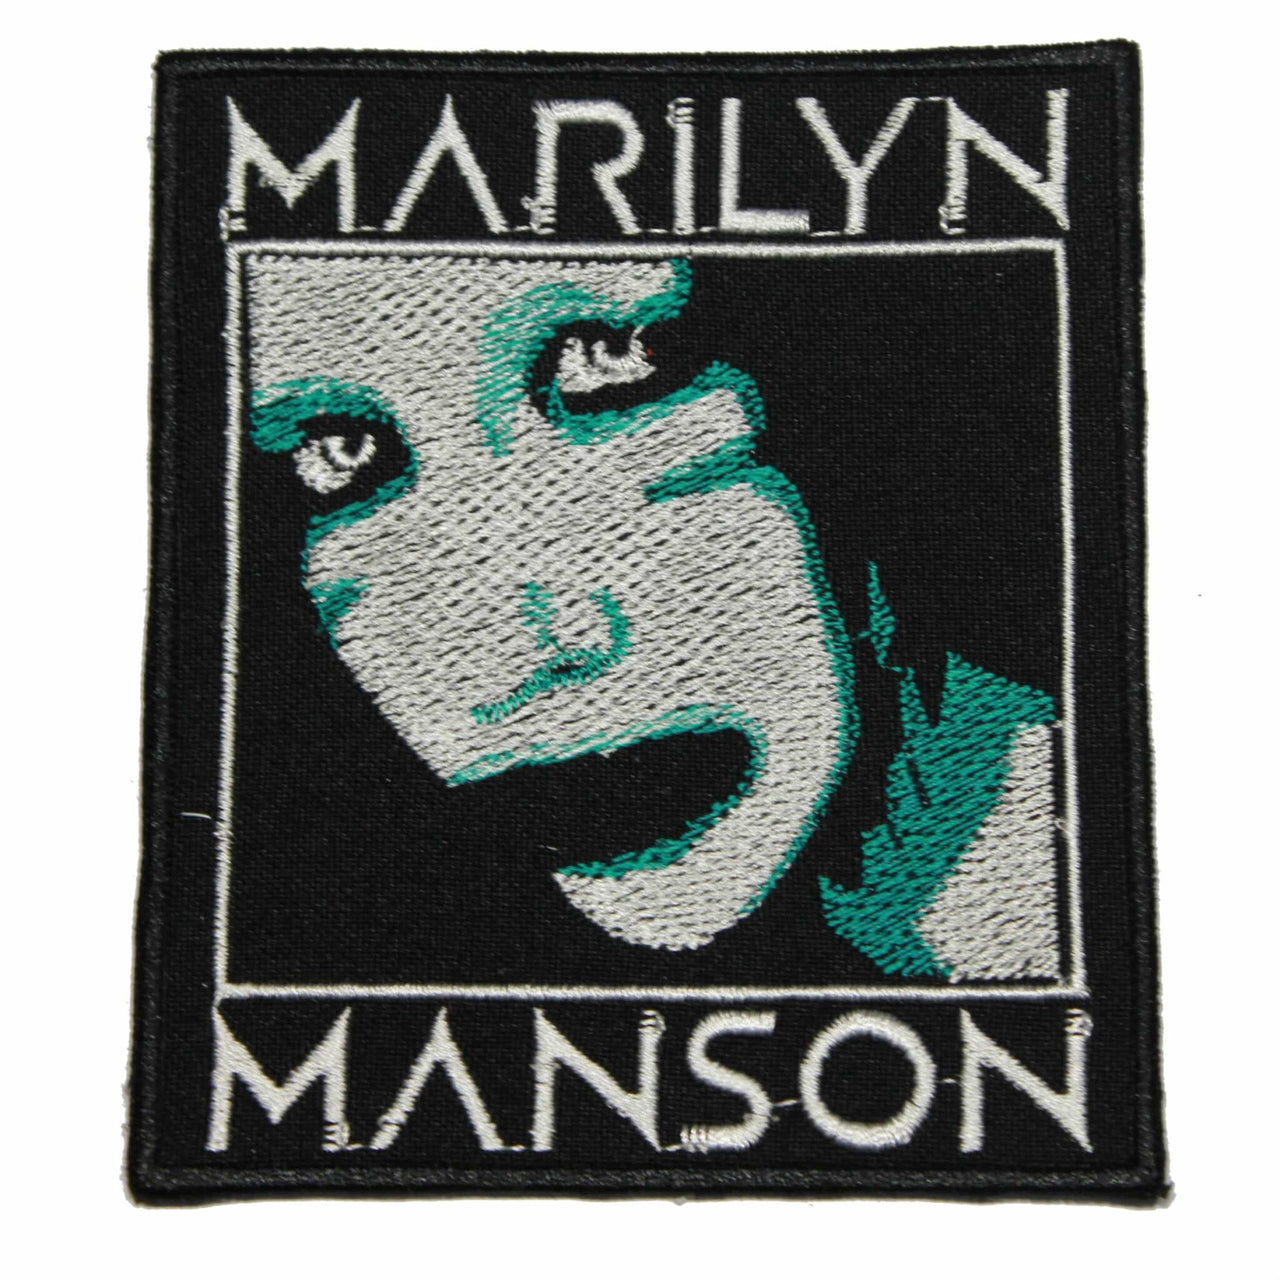 Marilyn Manson Patch